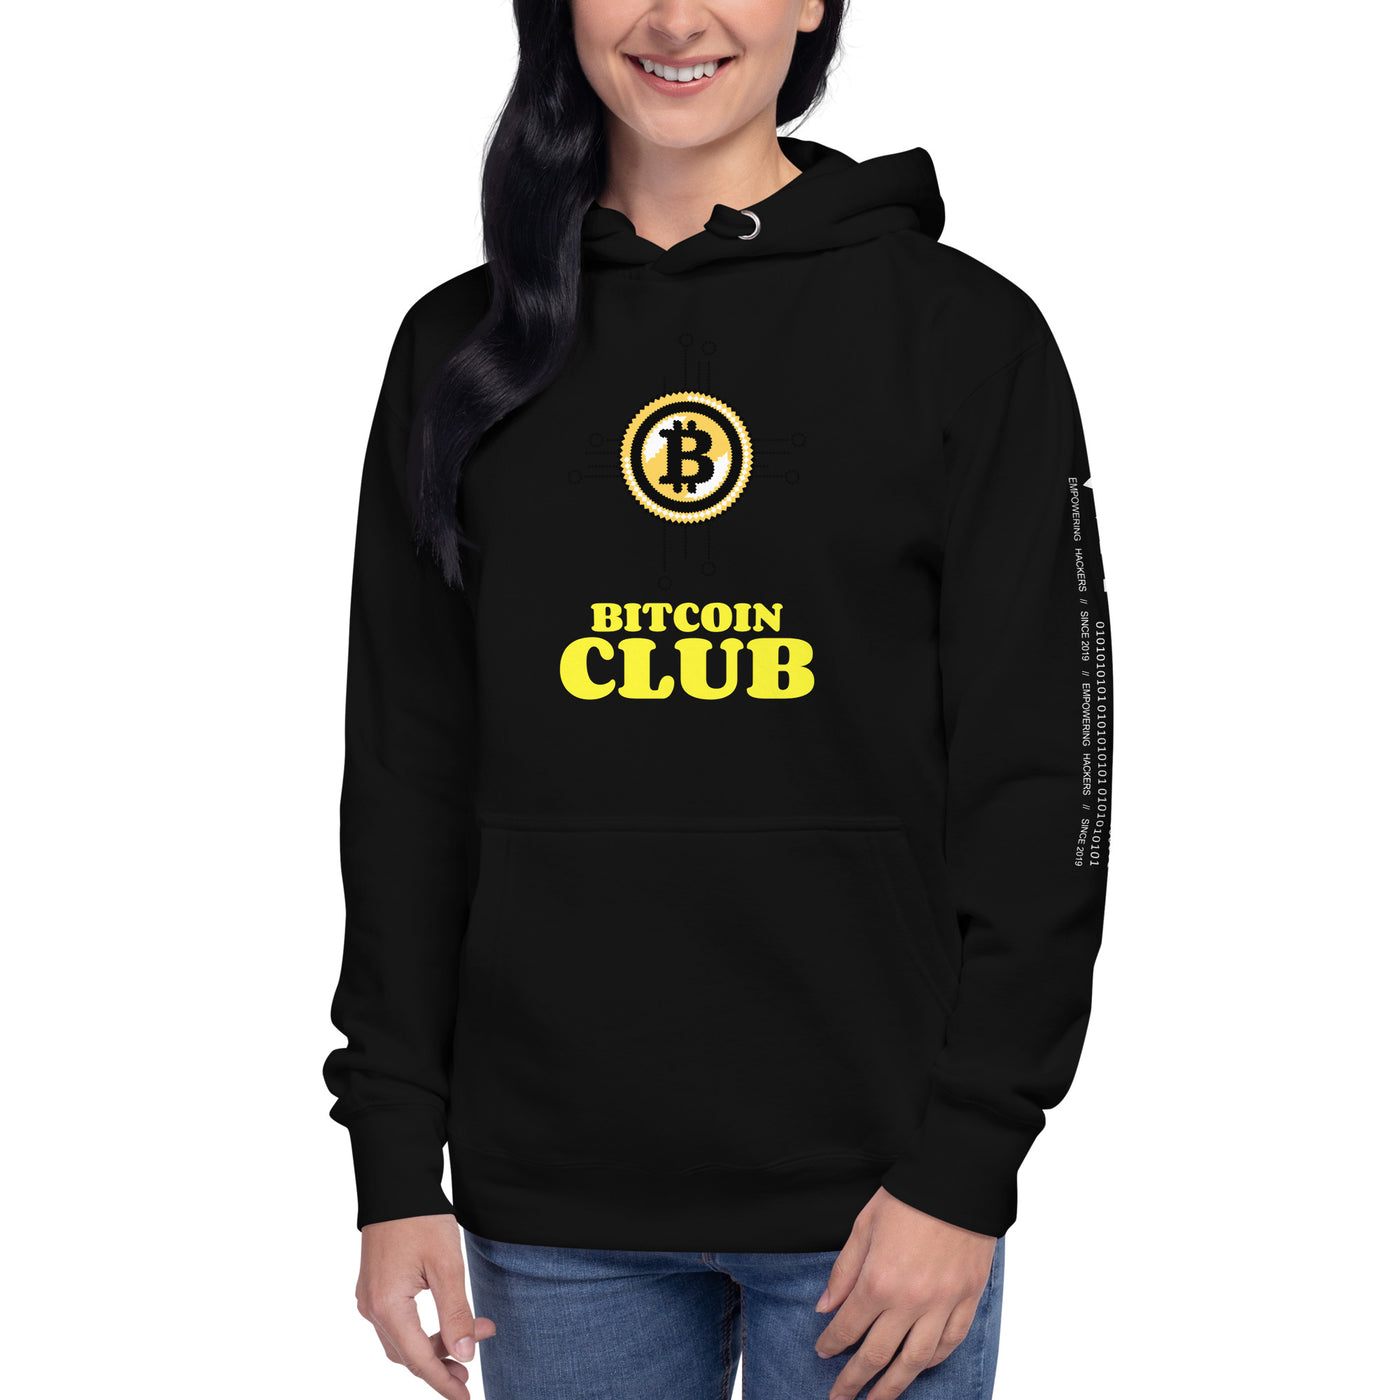 Bitcoin Club V6 - Unisex Hoodie